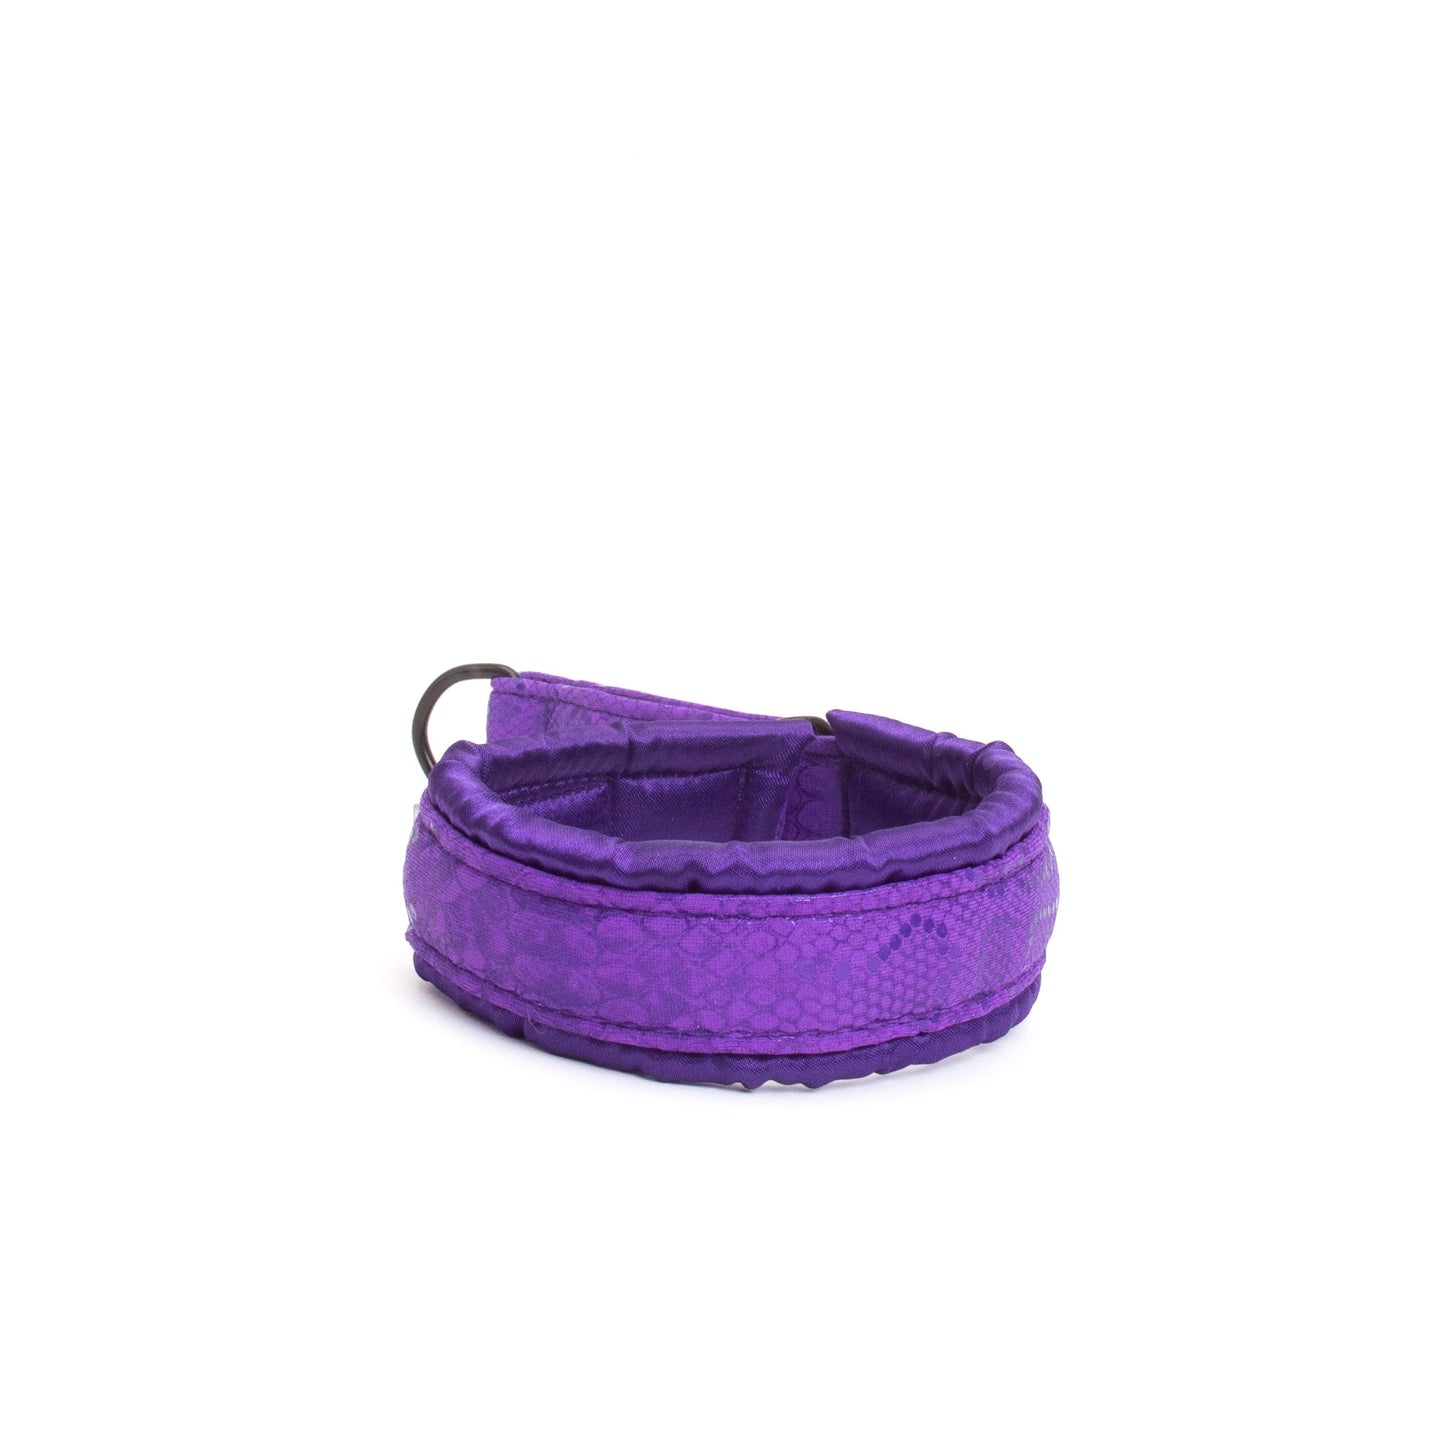 Small / Medium / Large Martingale Collar Poodle Supply Purple Snake